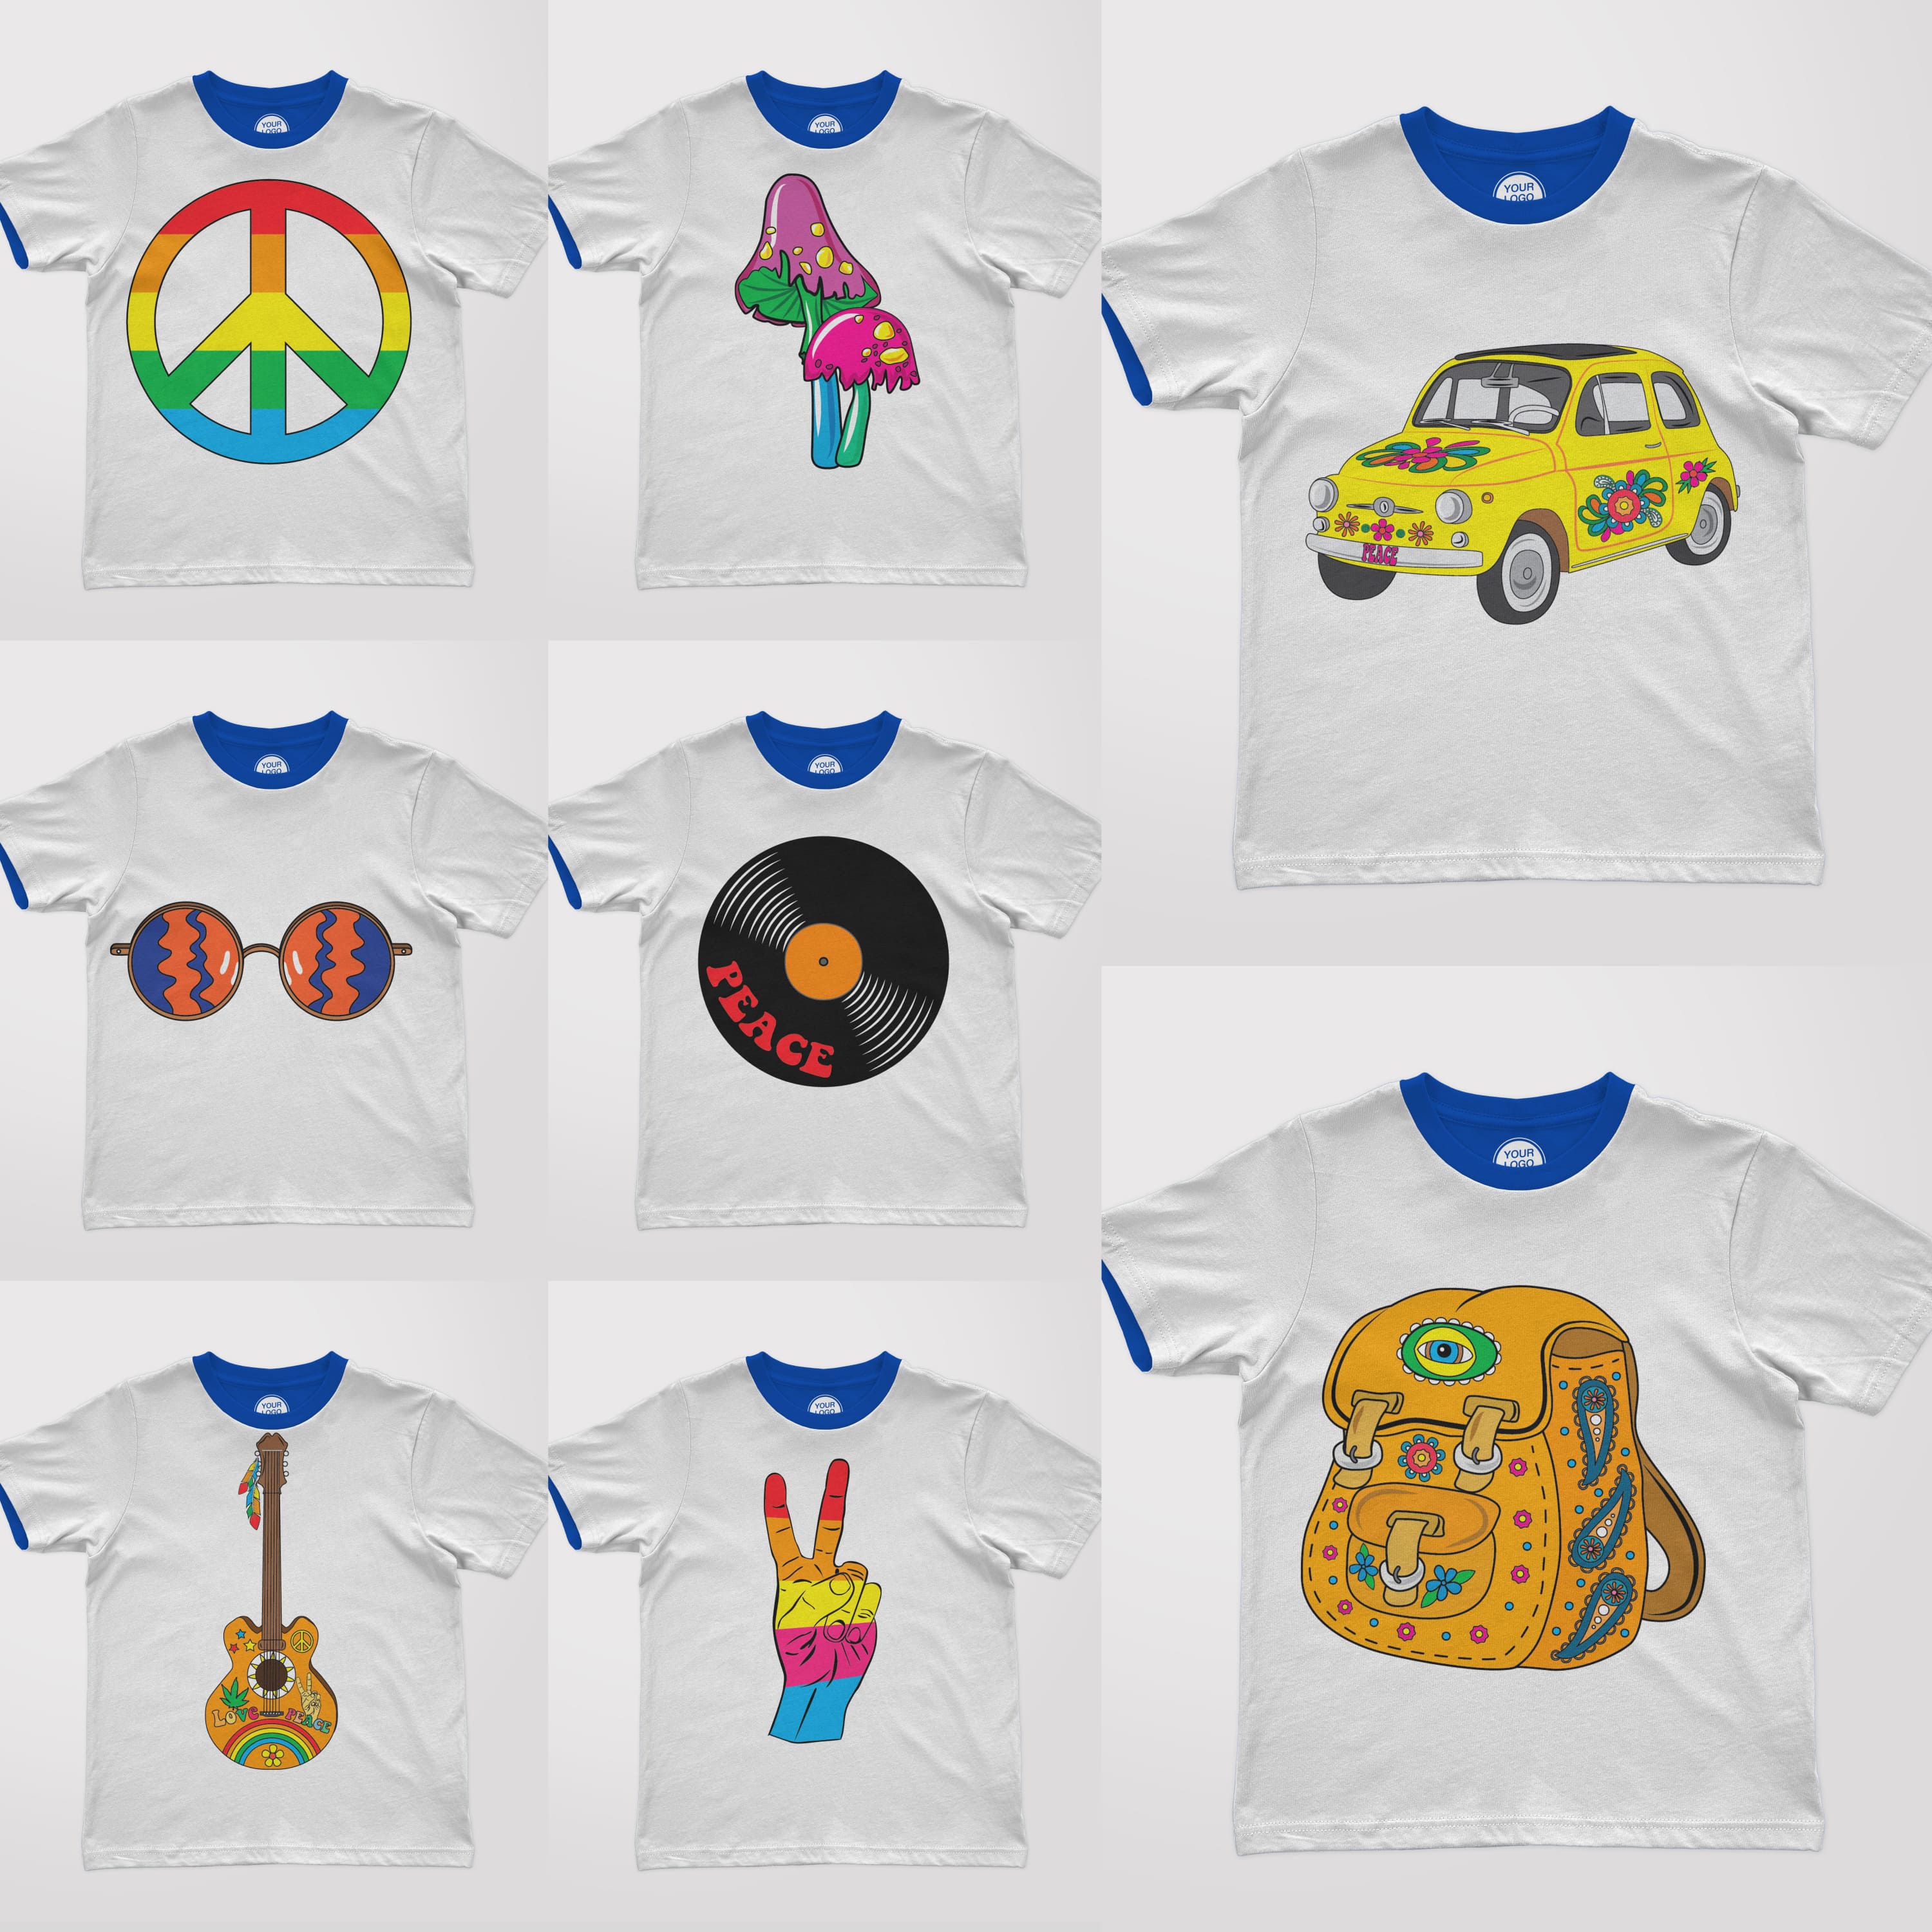 Big diversity of hippie t-shirts designs.